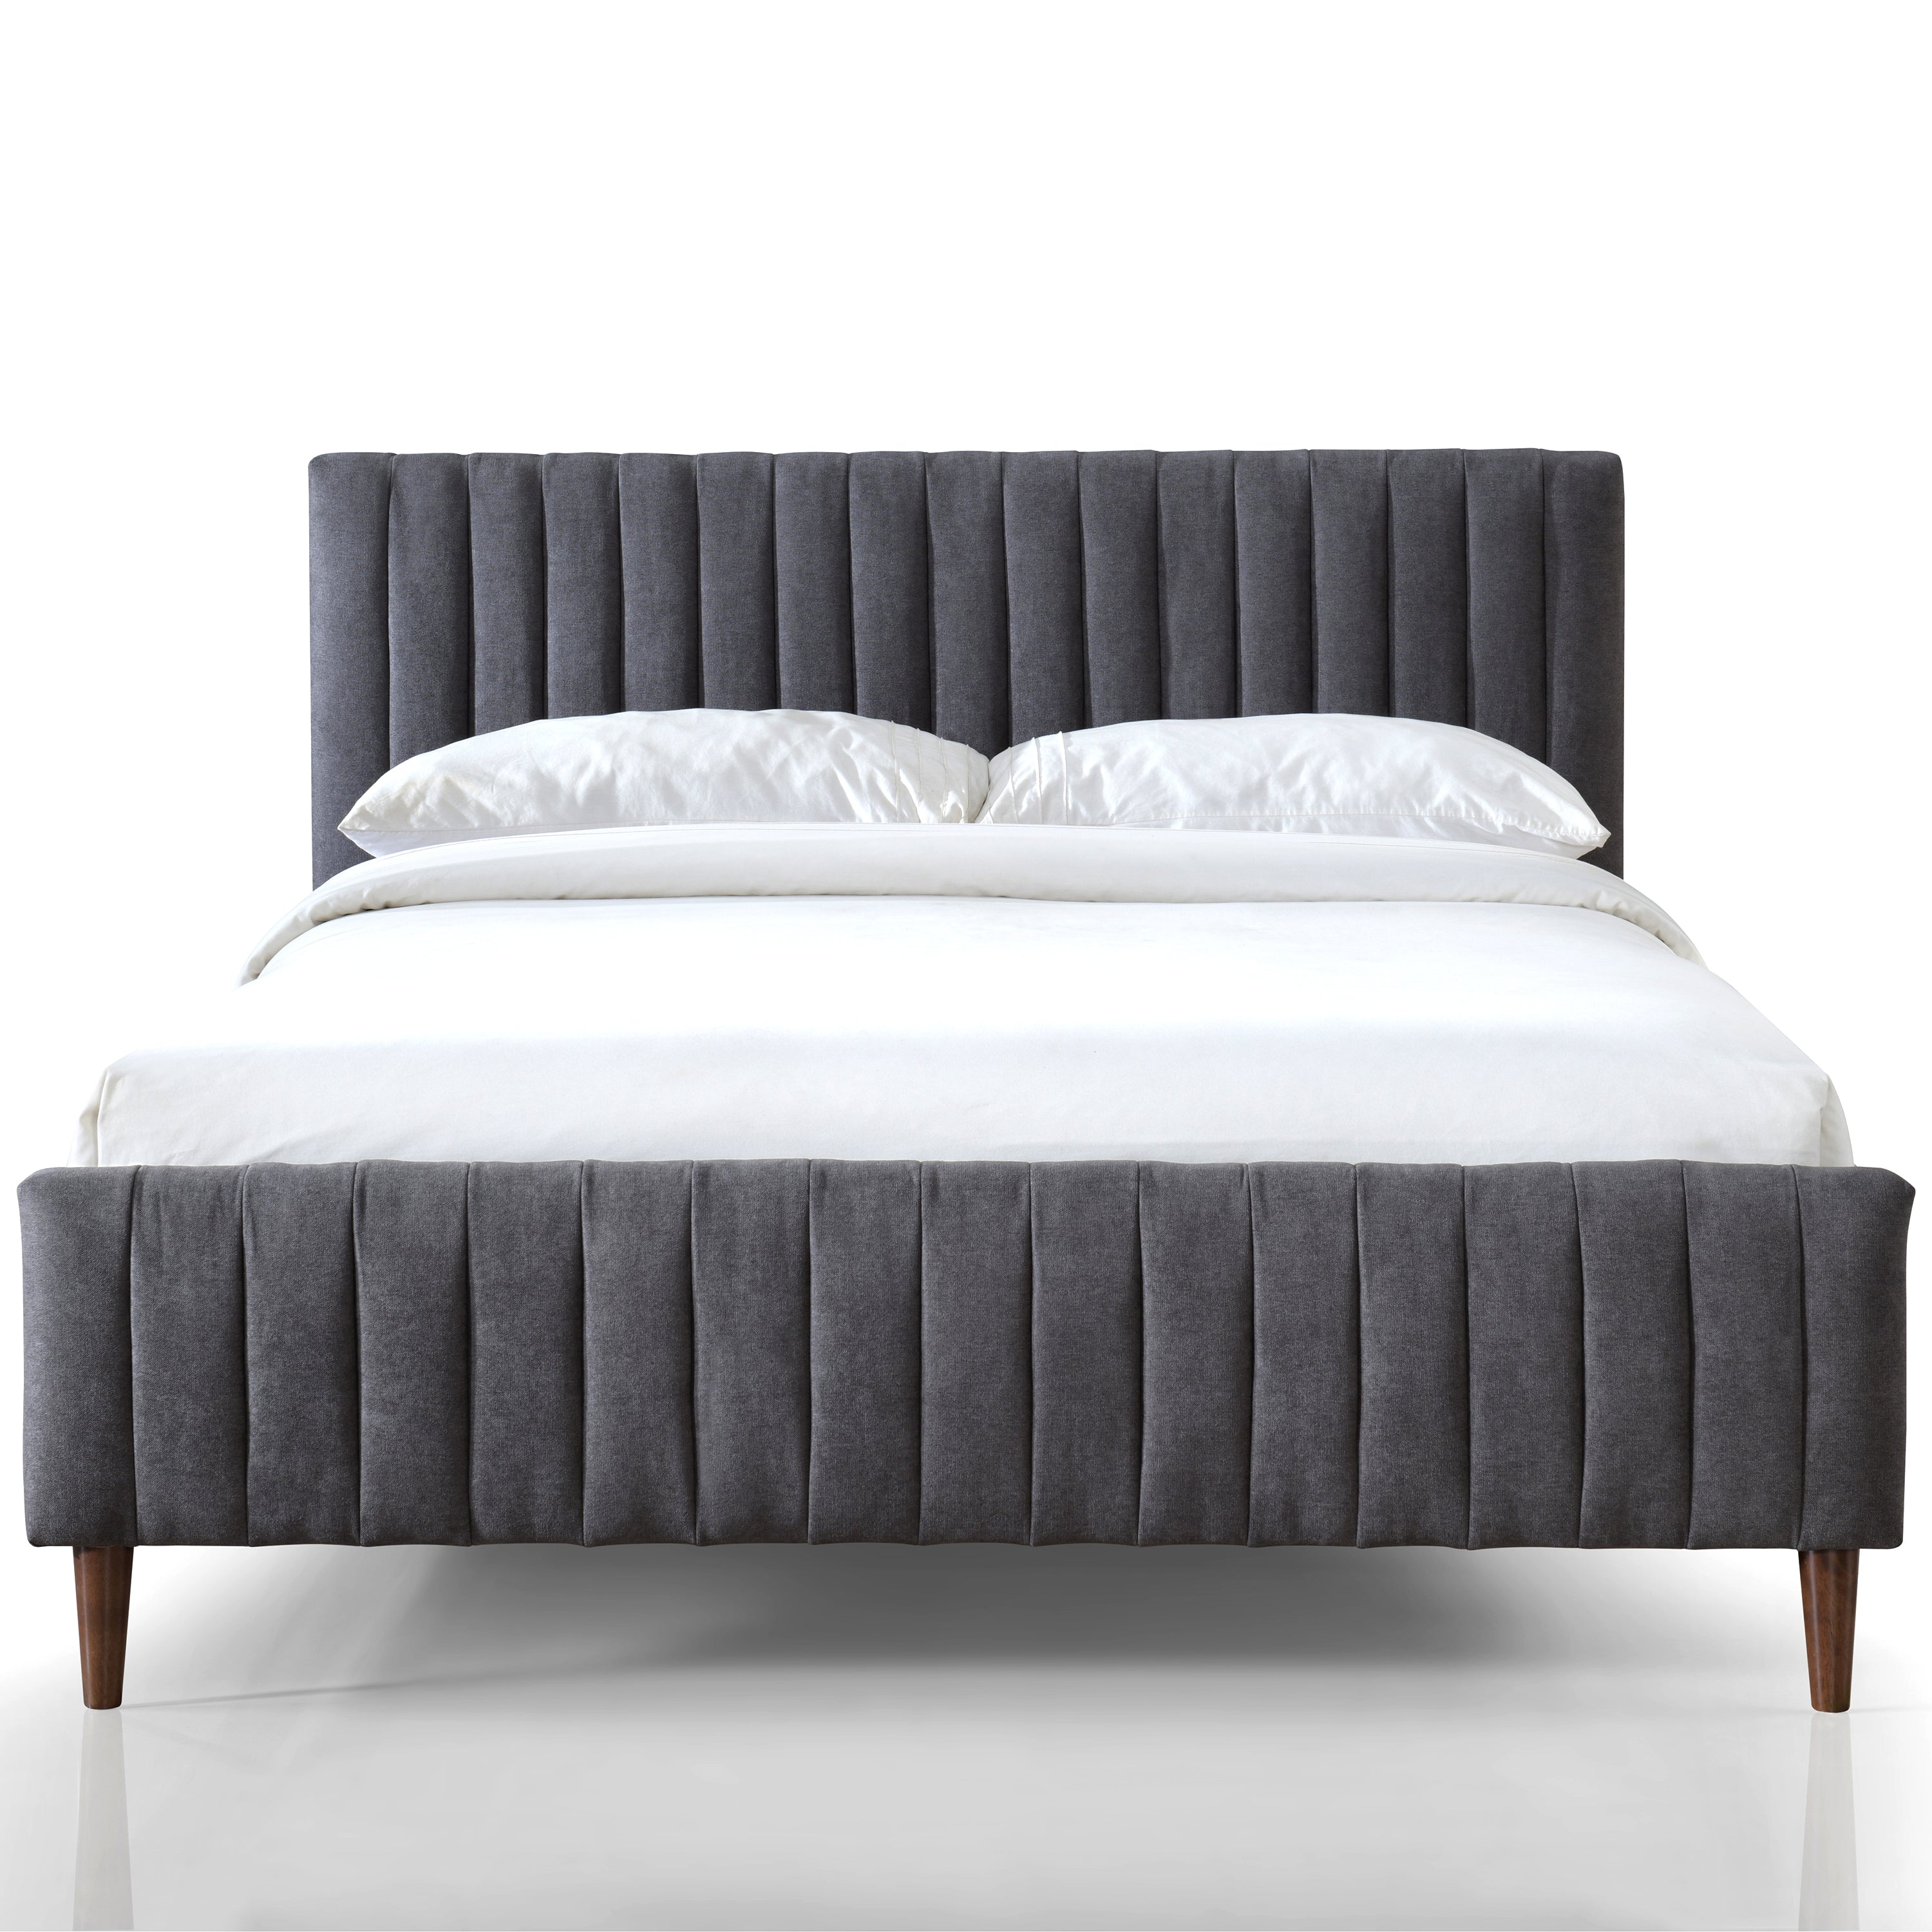 Spencer Upholstered Platform Bed - Queen size, Dark Gray